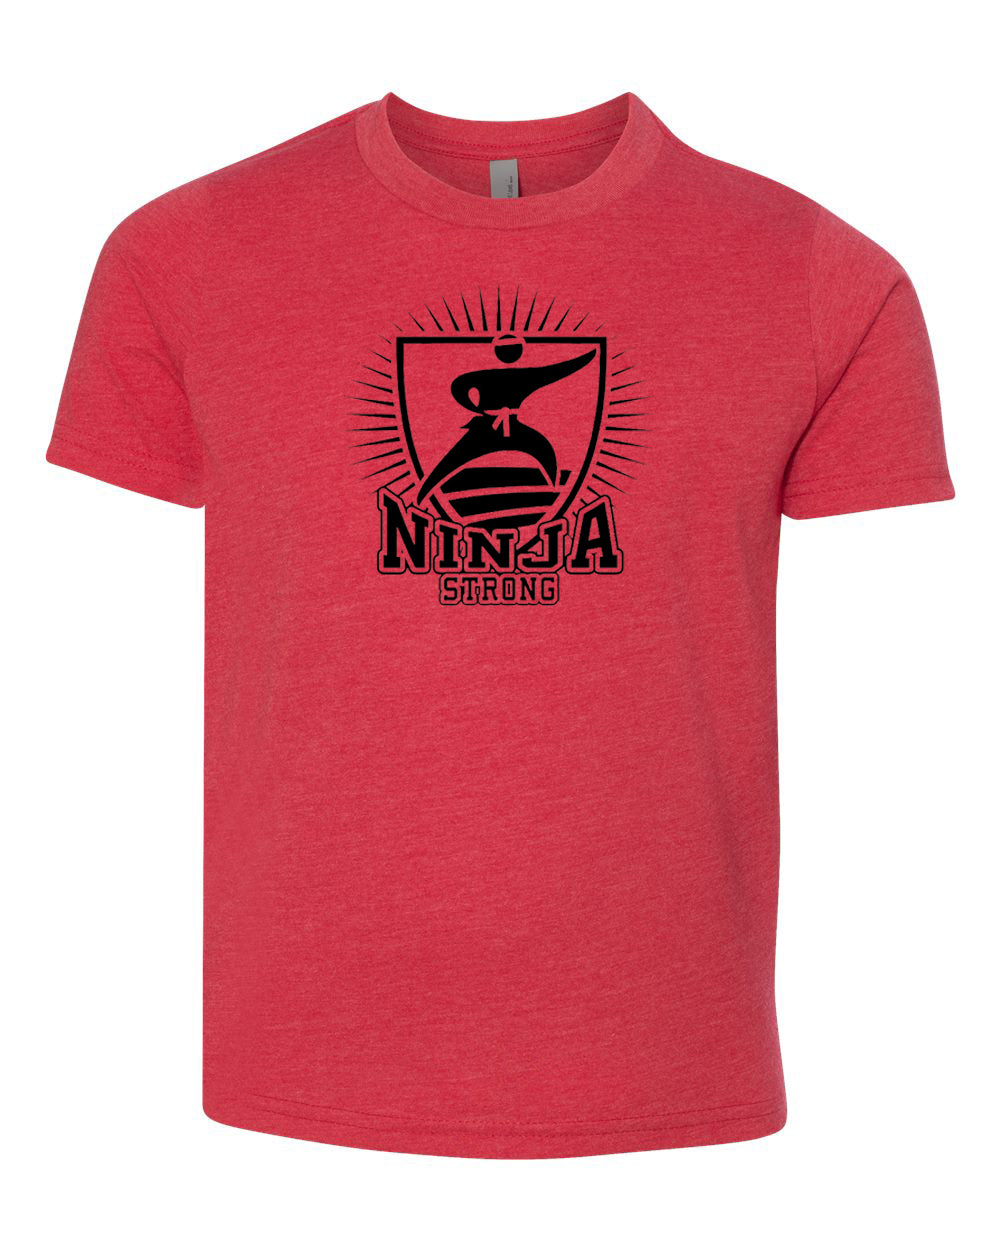 Ninja Strong Youth T-Shirt Red